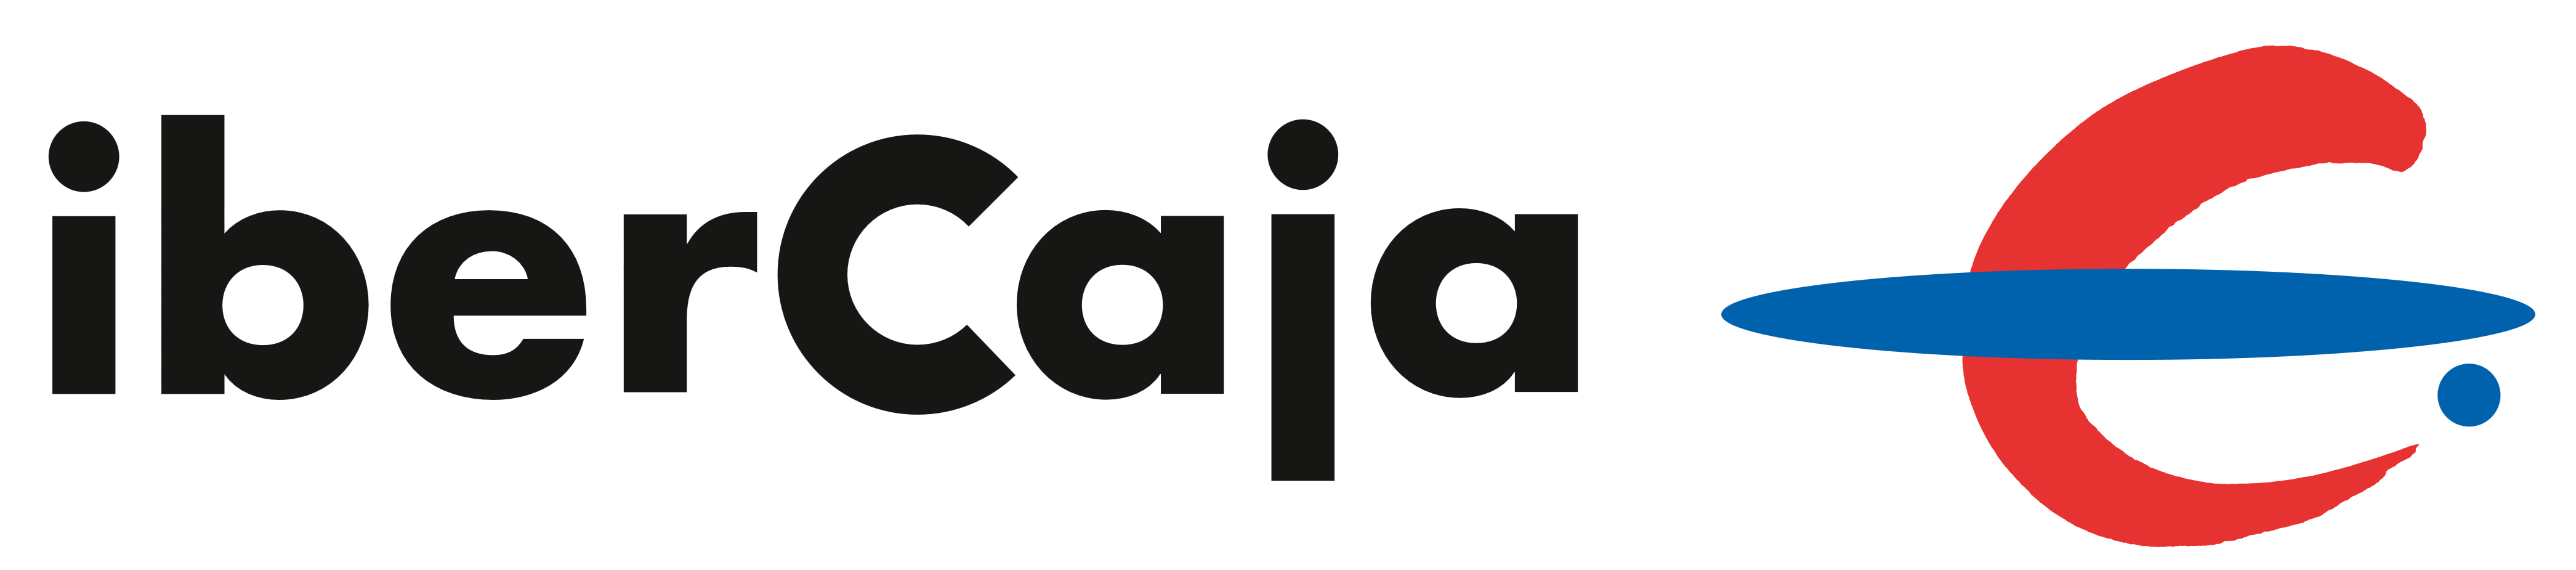 iberCaja logo